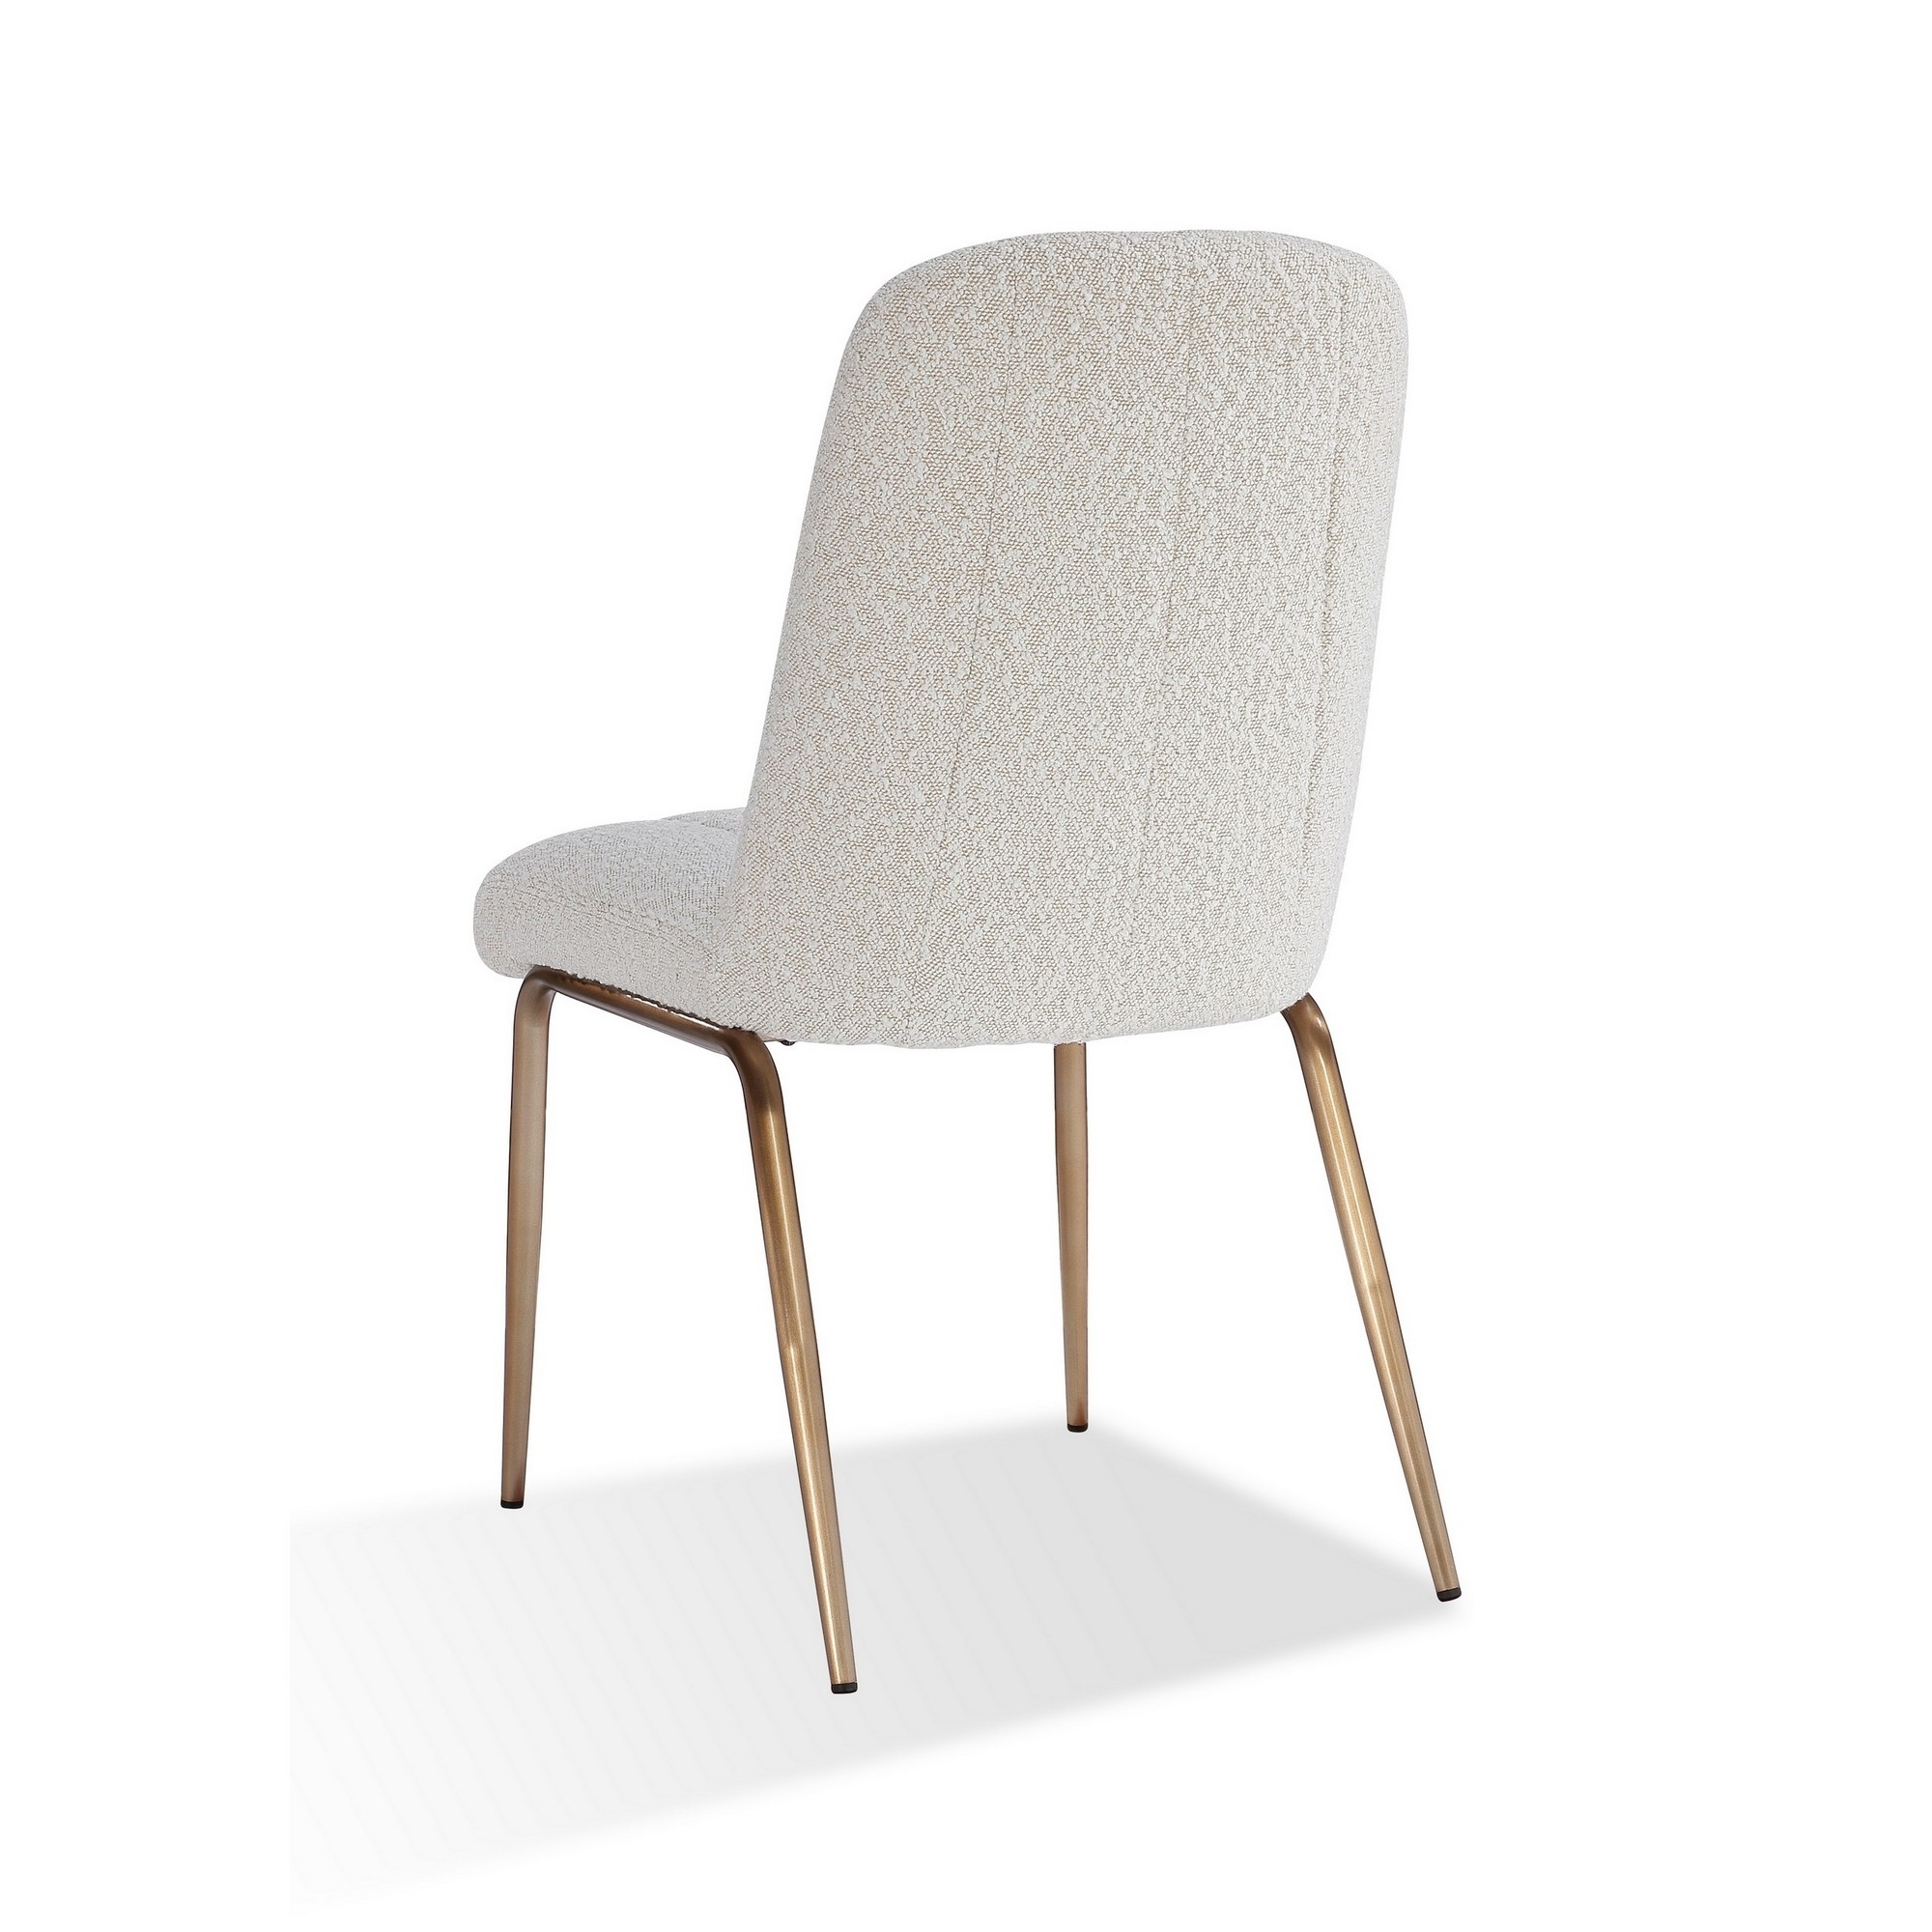 Rise 19 Inch Dining Chair, Soft Boucle Upholstery, White, Bronze Legs -Saltoro Sherpi